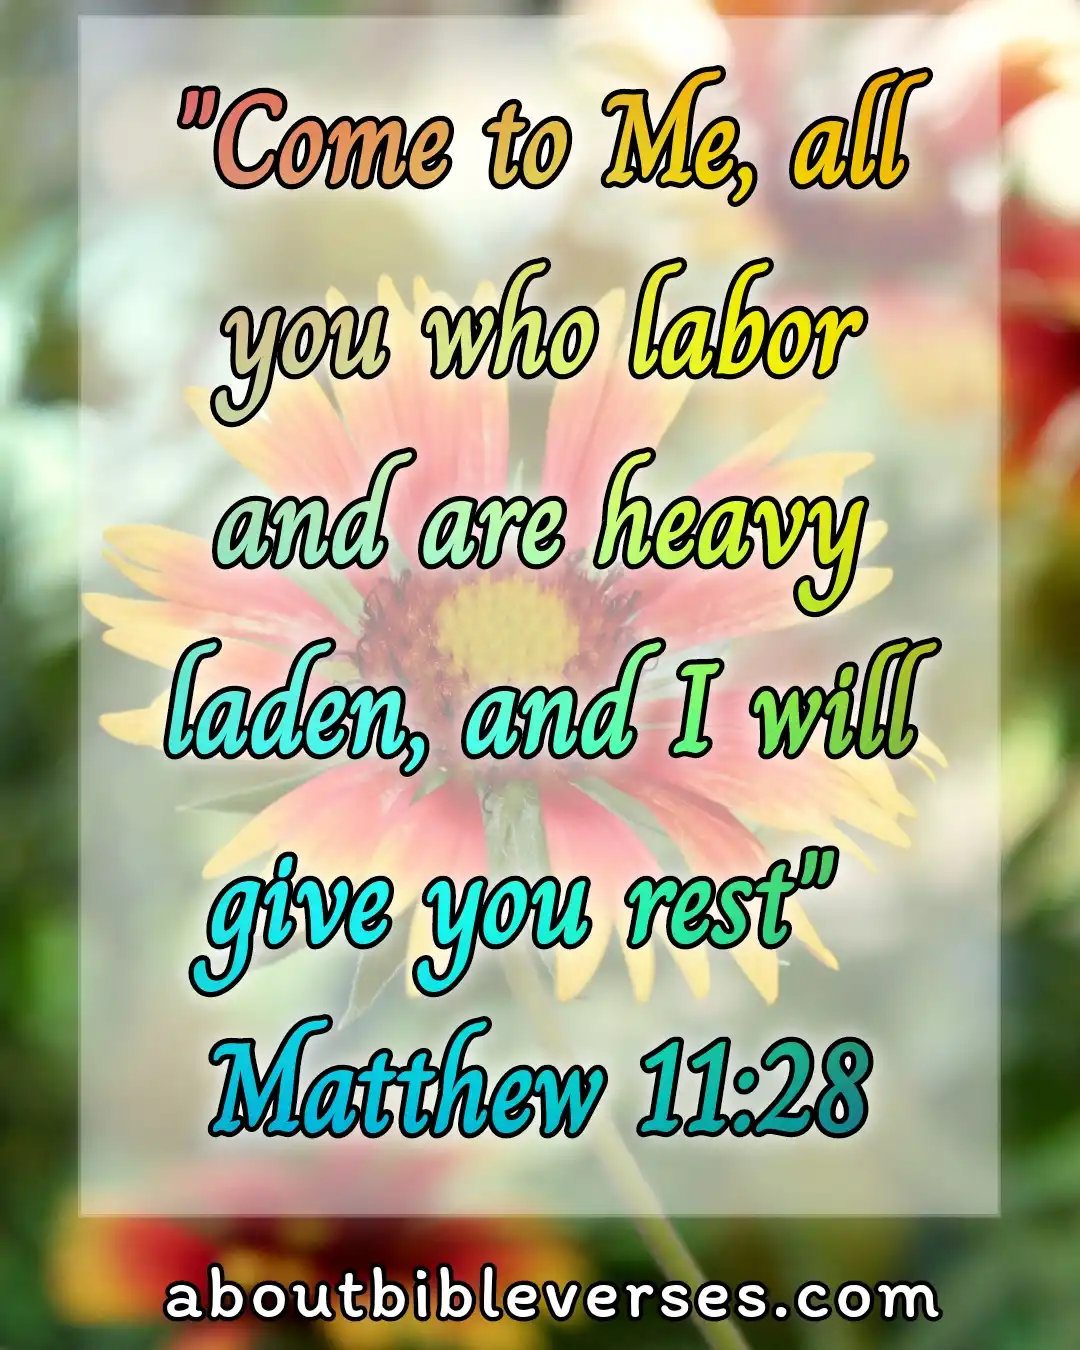 today bible verse (Matthew 11:28)